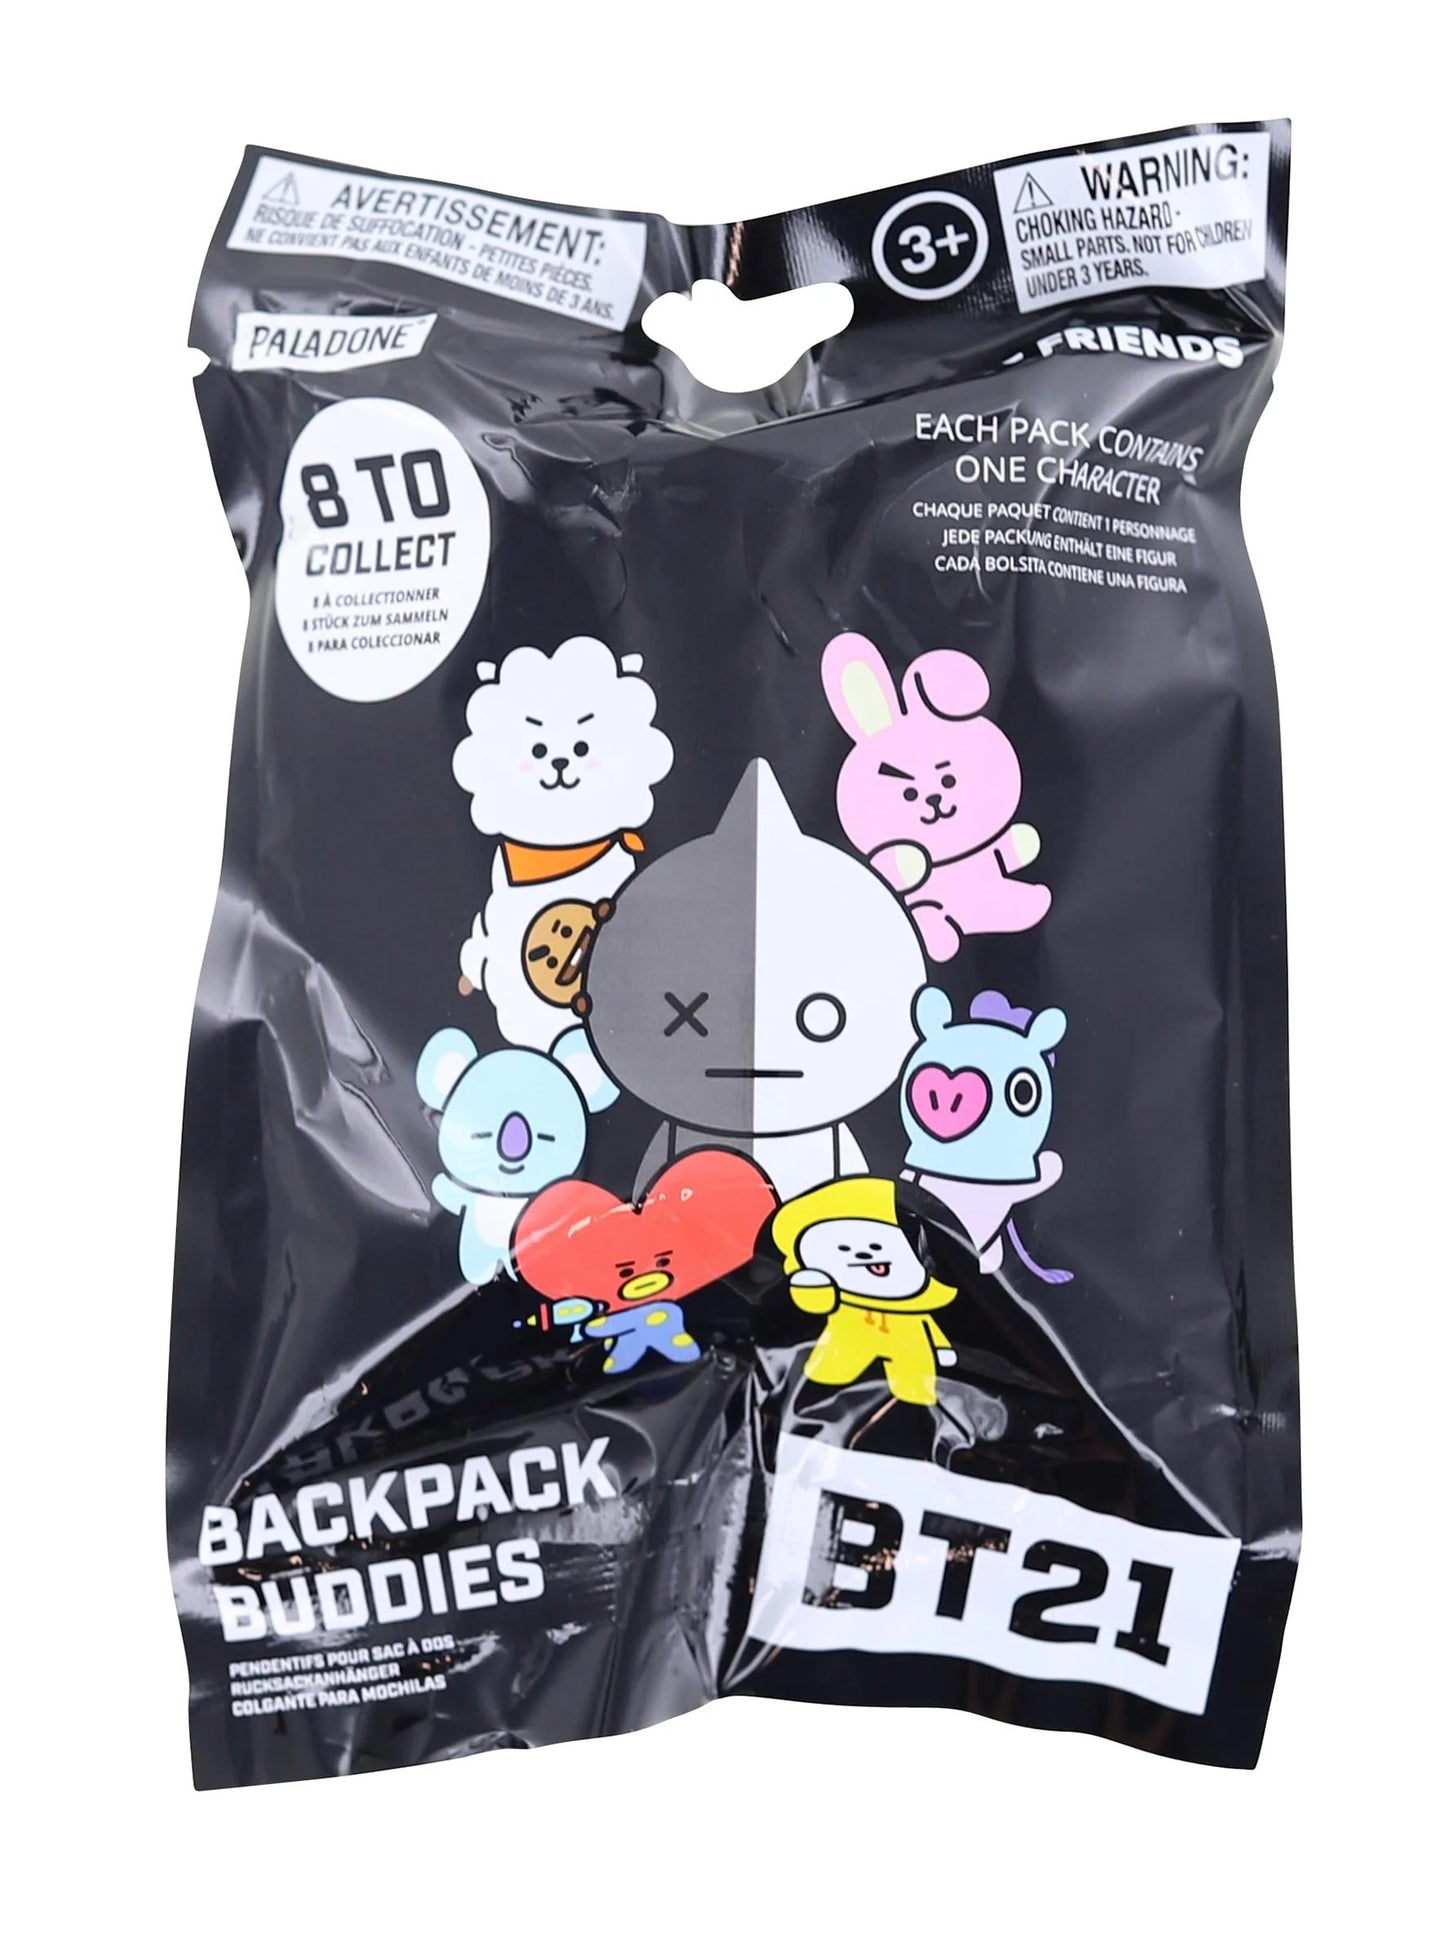 BT21 Backpack Buddies Blind Bag (one random)